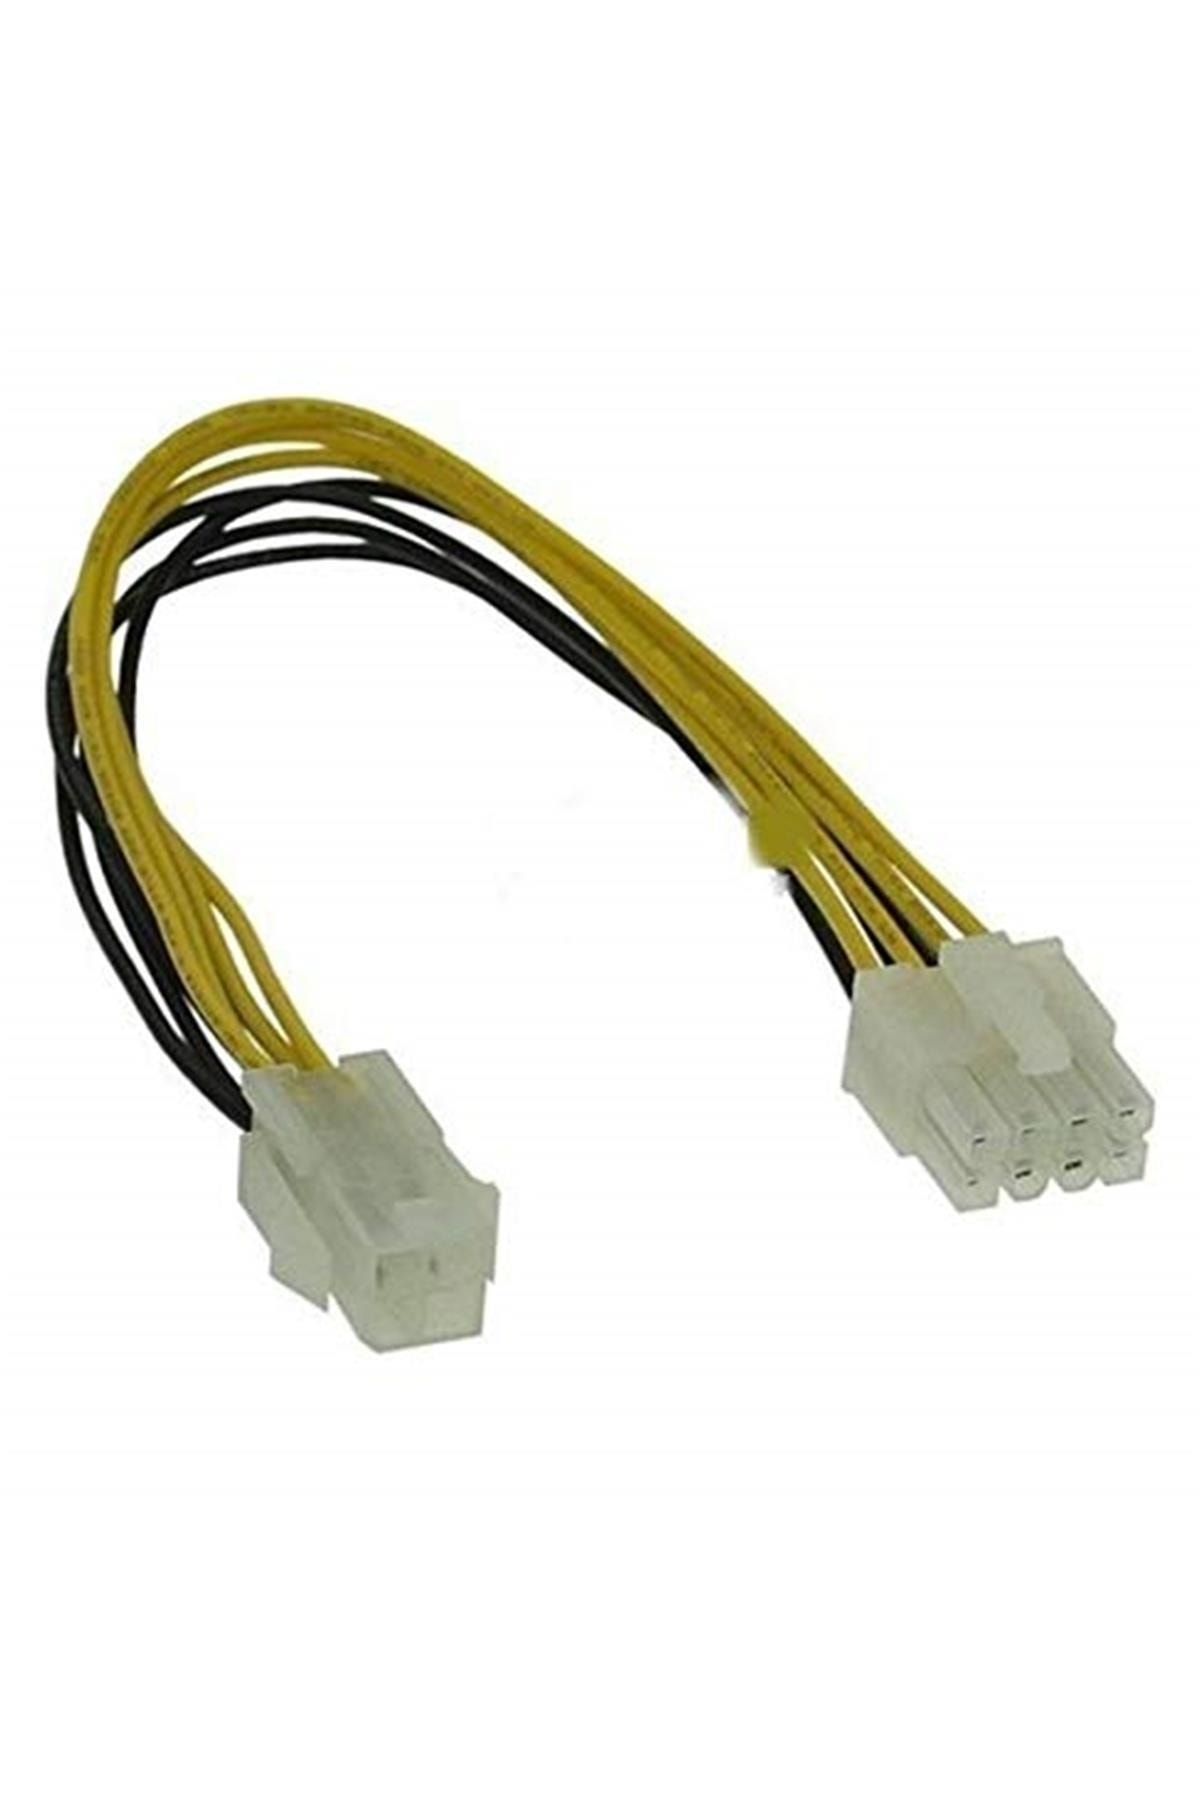 Alfais Marka: 4261 4 Pin To 8 Pin Güç Çevirici Power Supply Çevirici Kablosu Kategori: Network Kabl